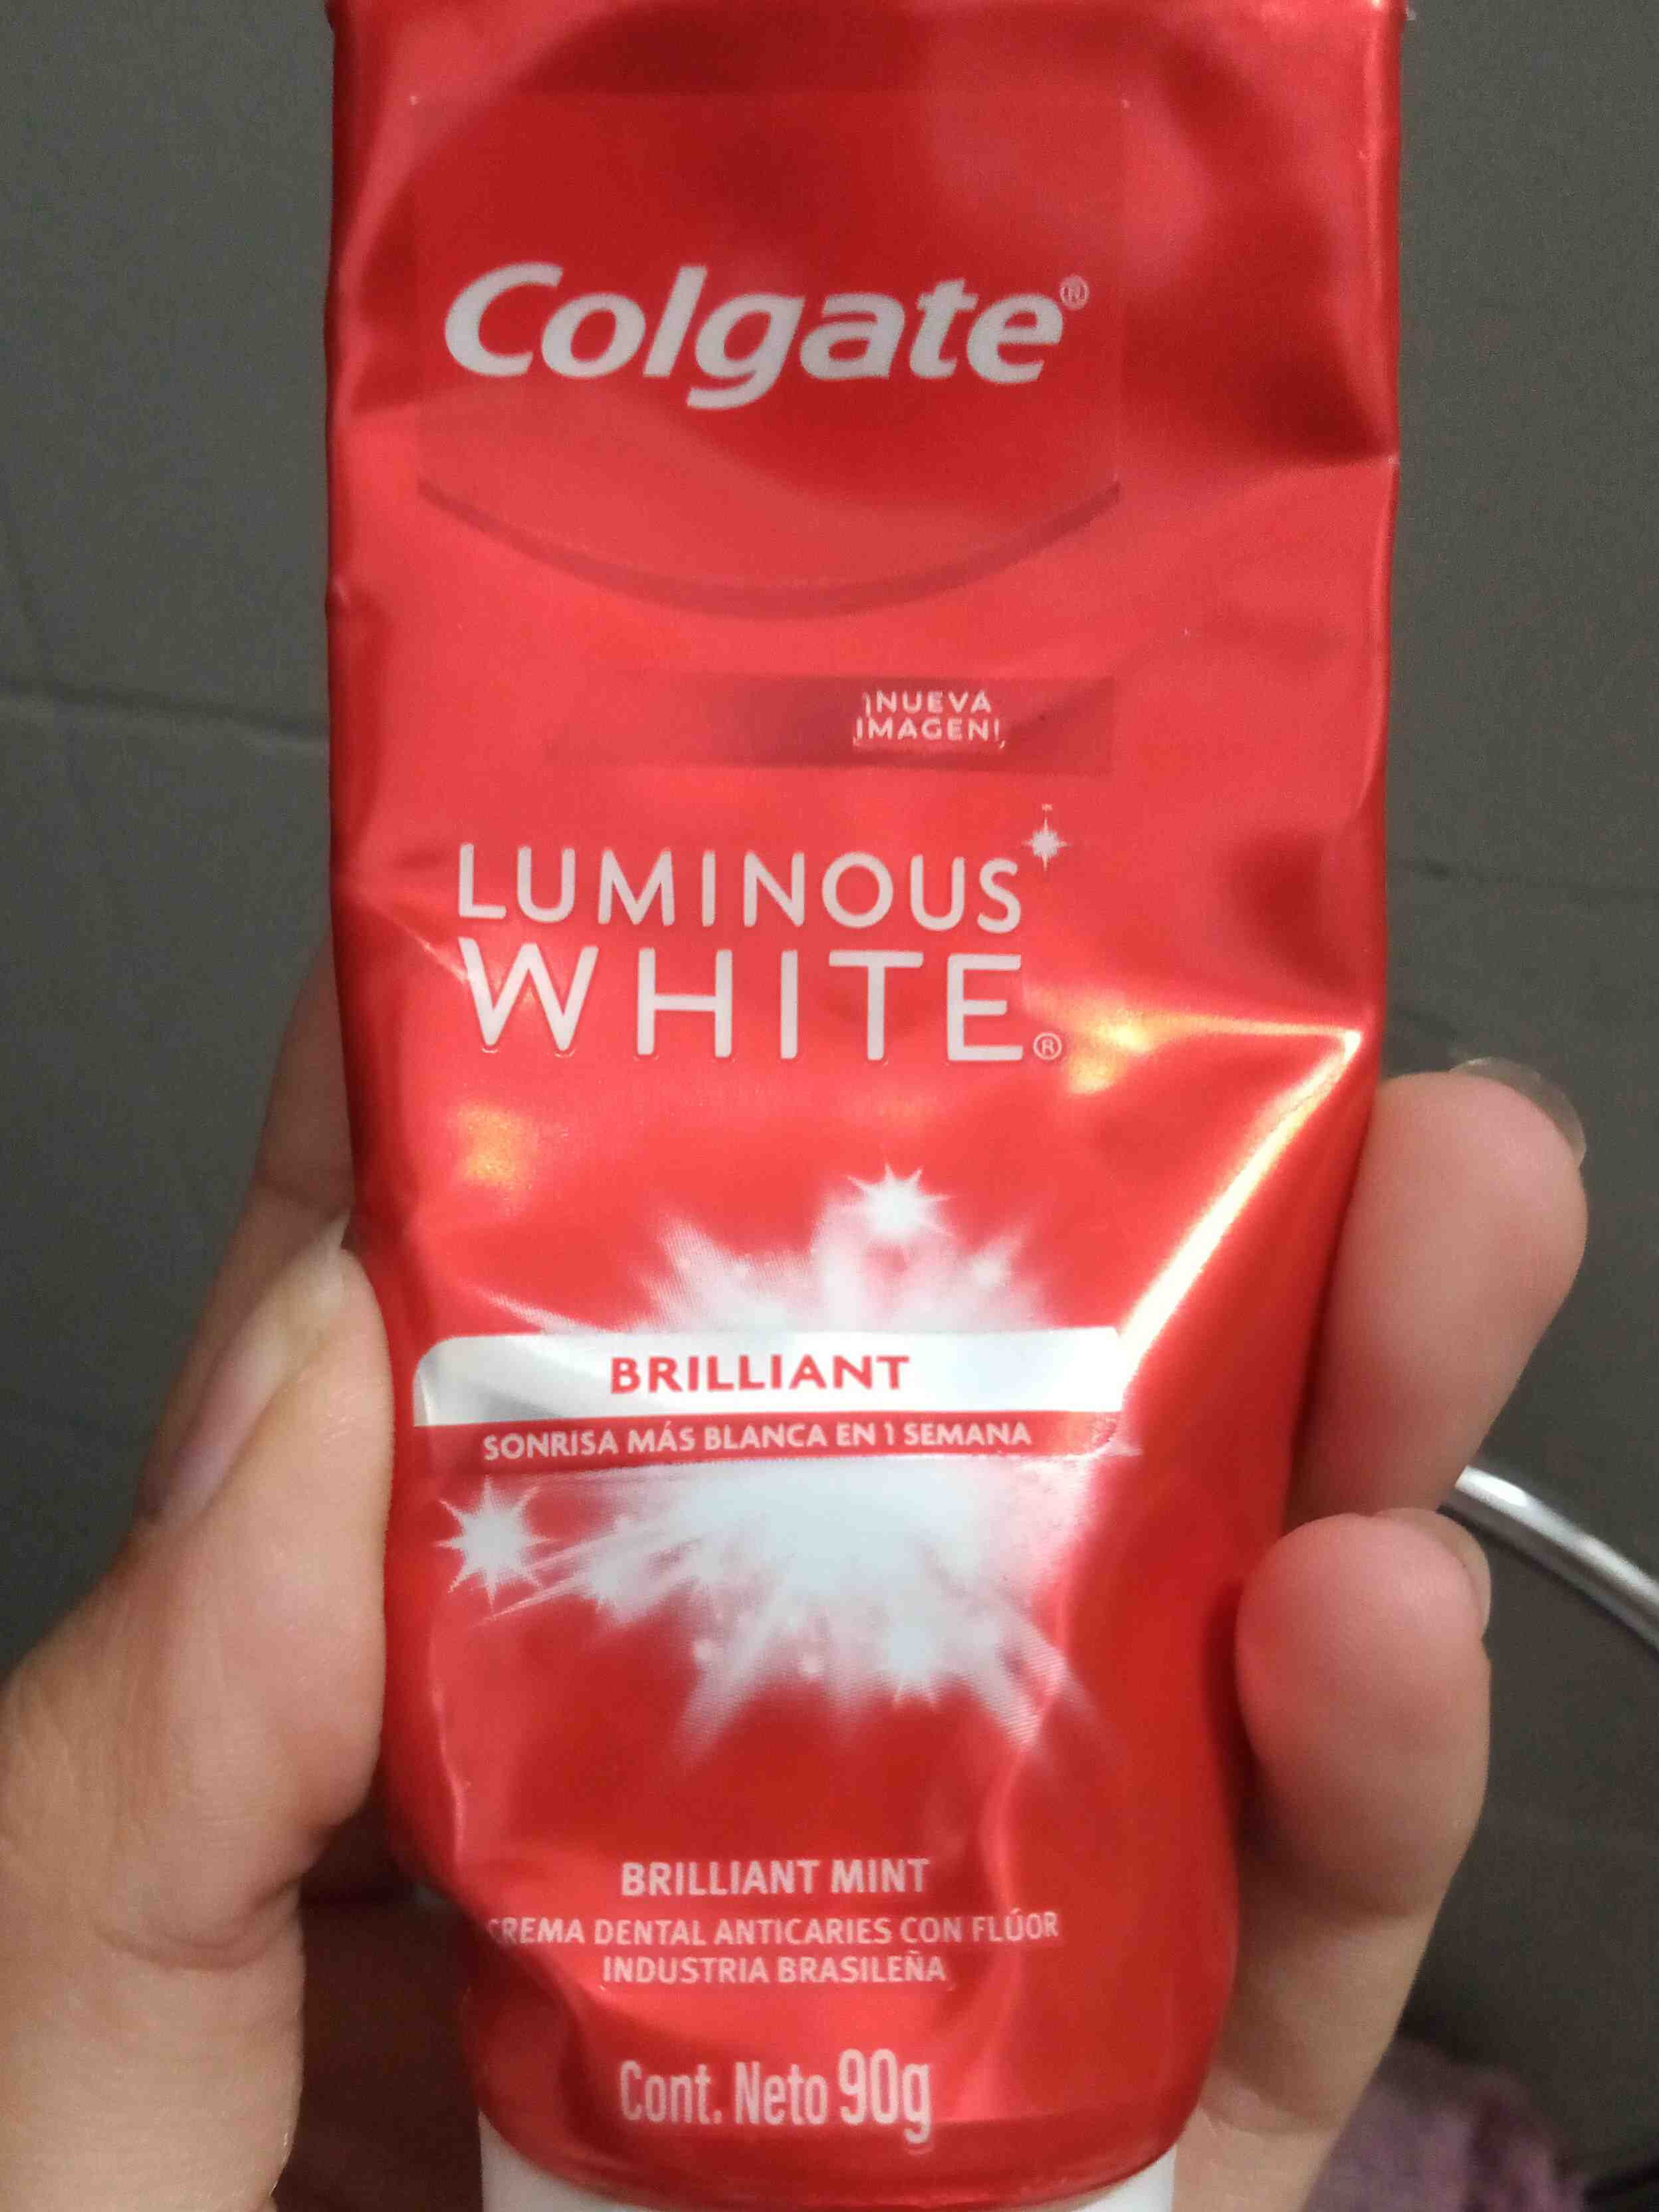 Luminous white - Produit - en